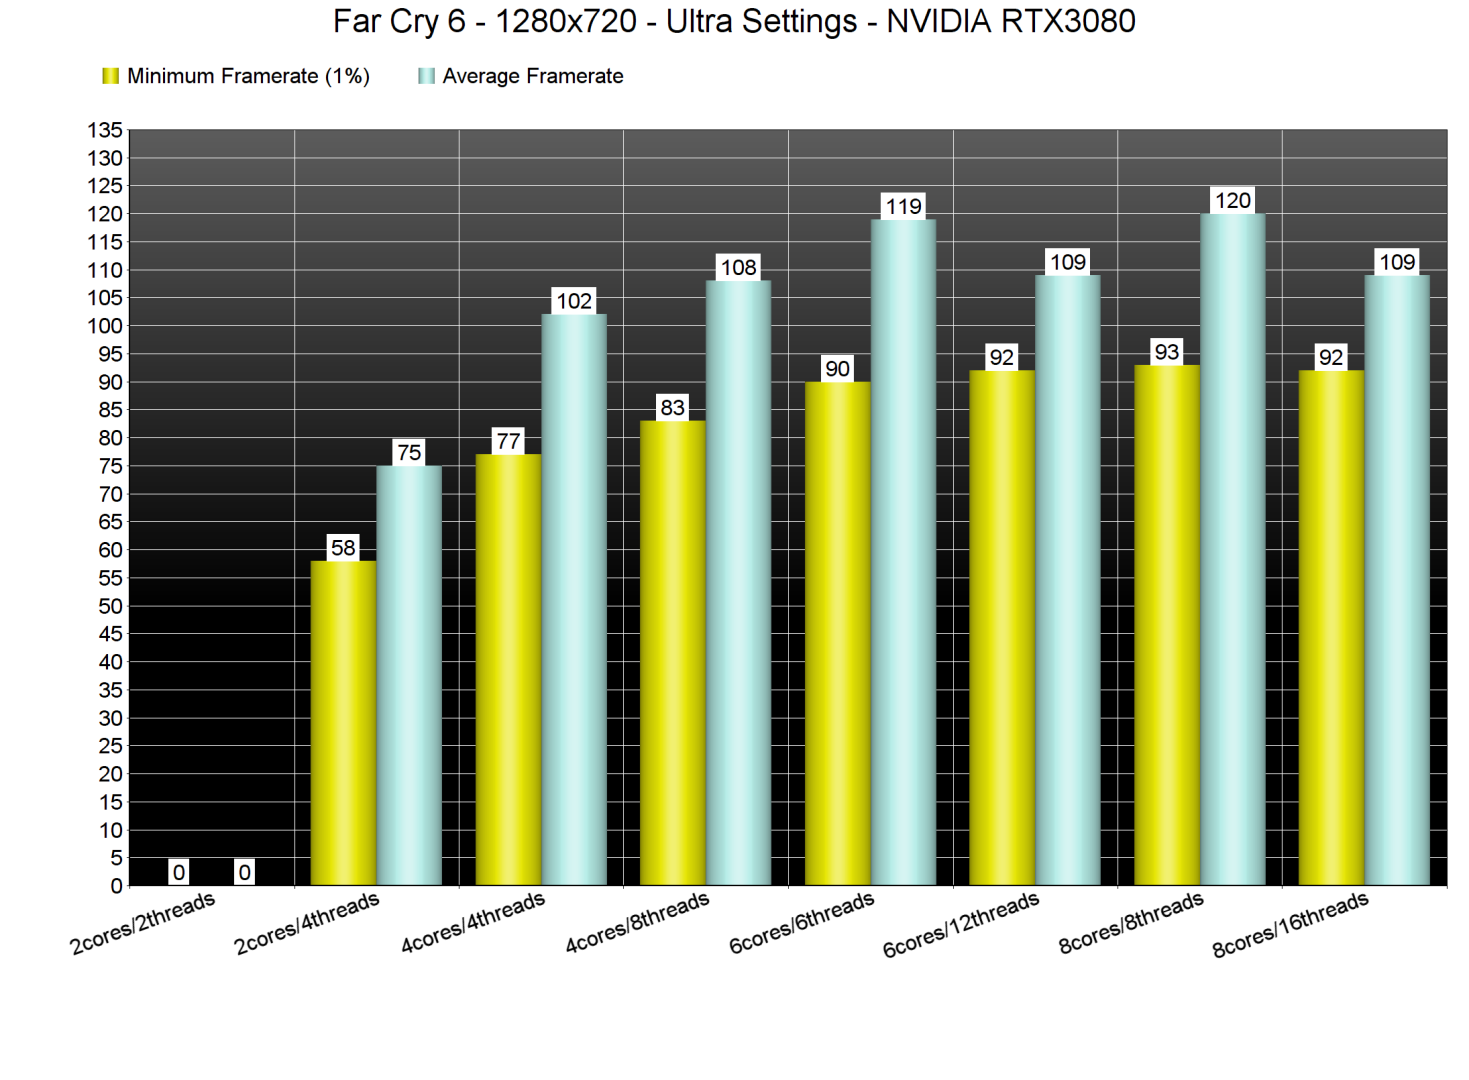 Far Cry 6 CPU benchmarks